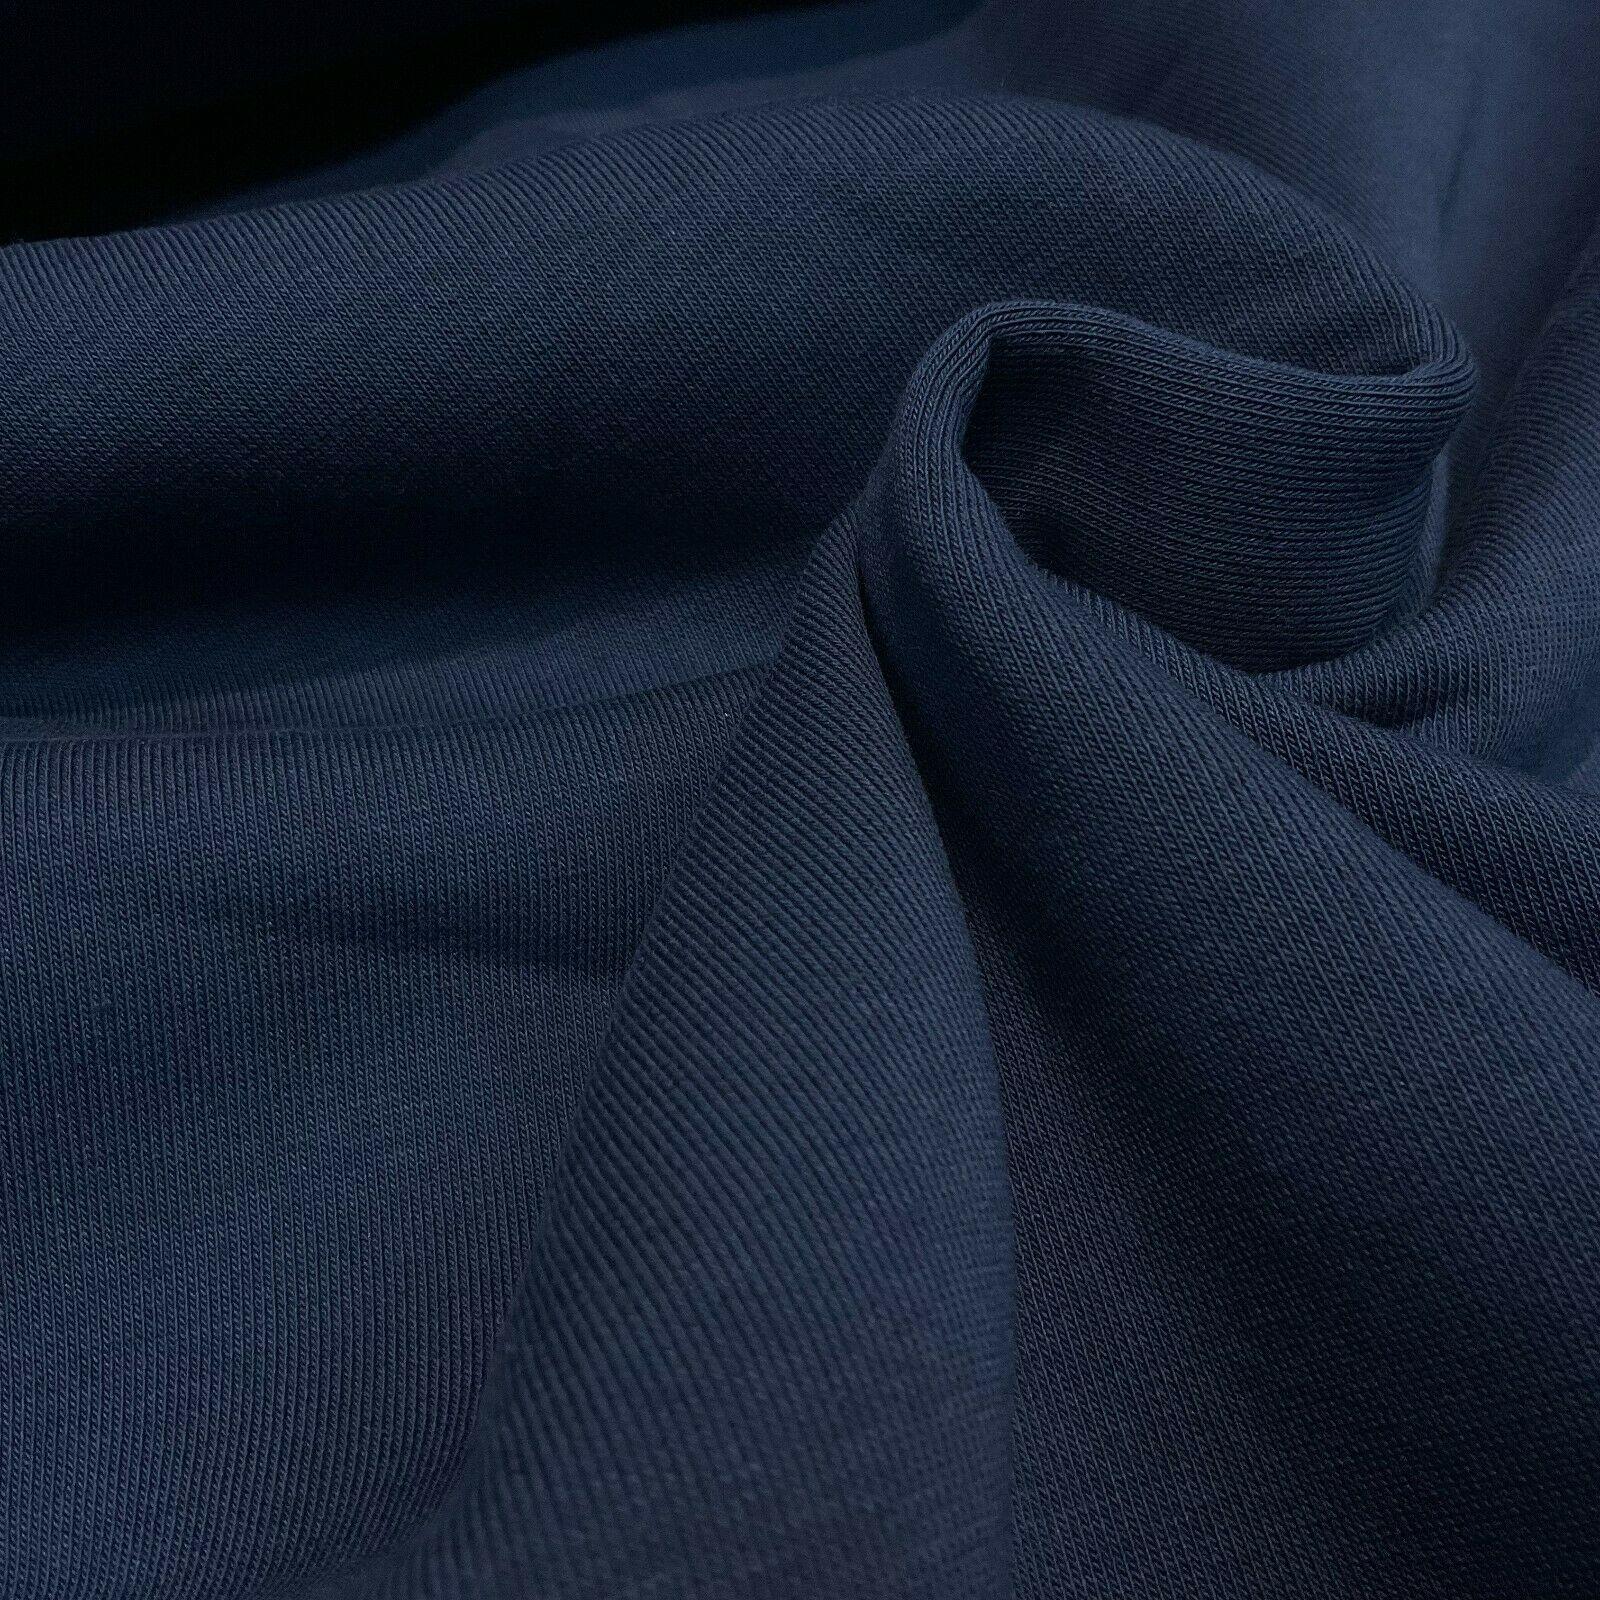 Plain Sweatshirt Fleece backed Fabric ideal for hoodies 158cm M1586